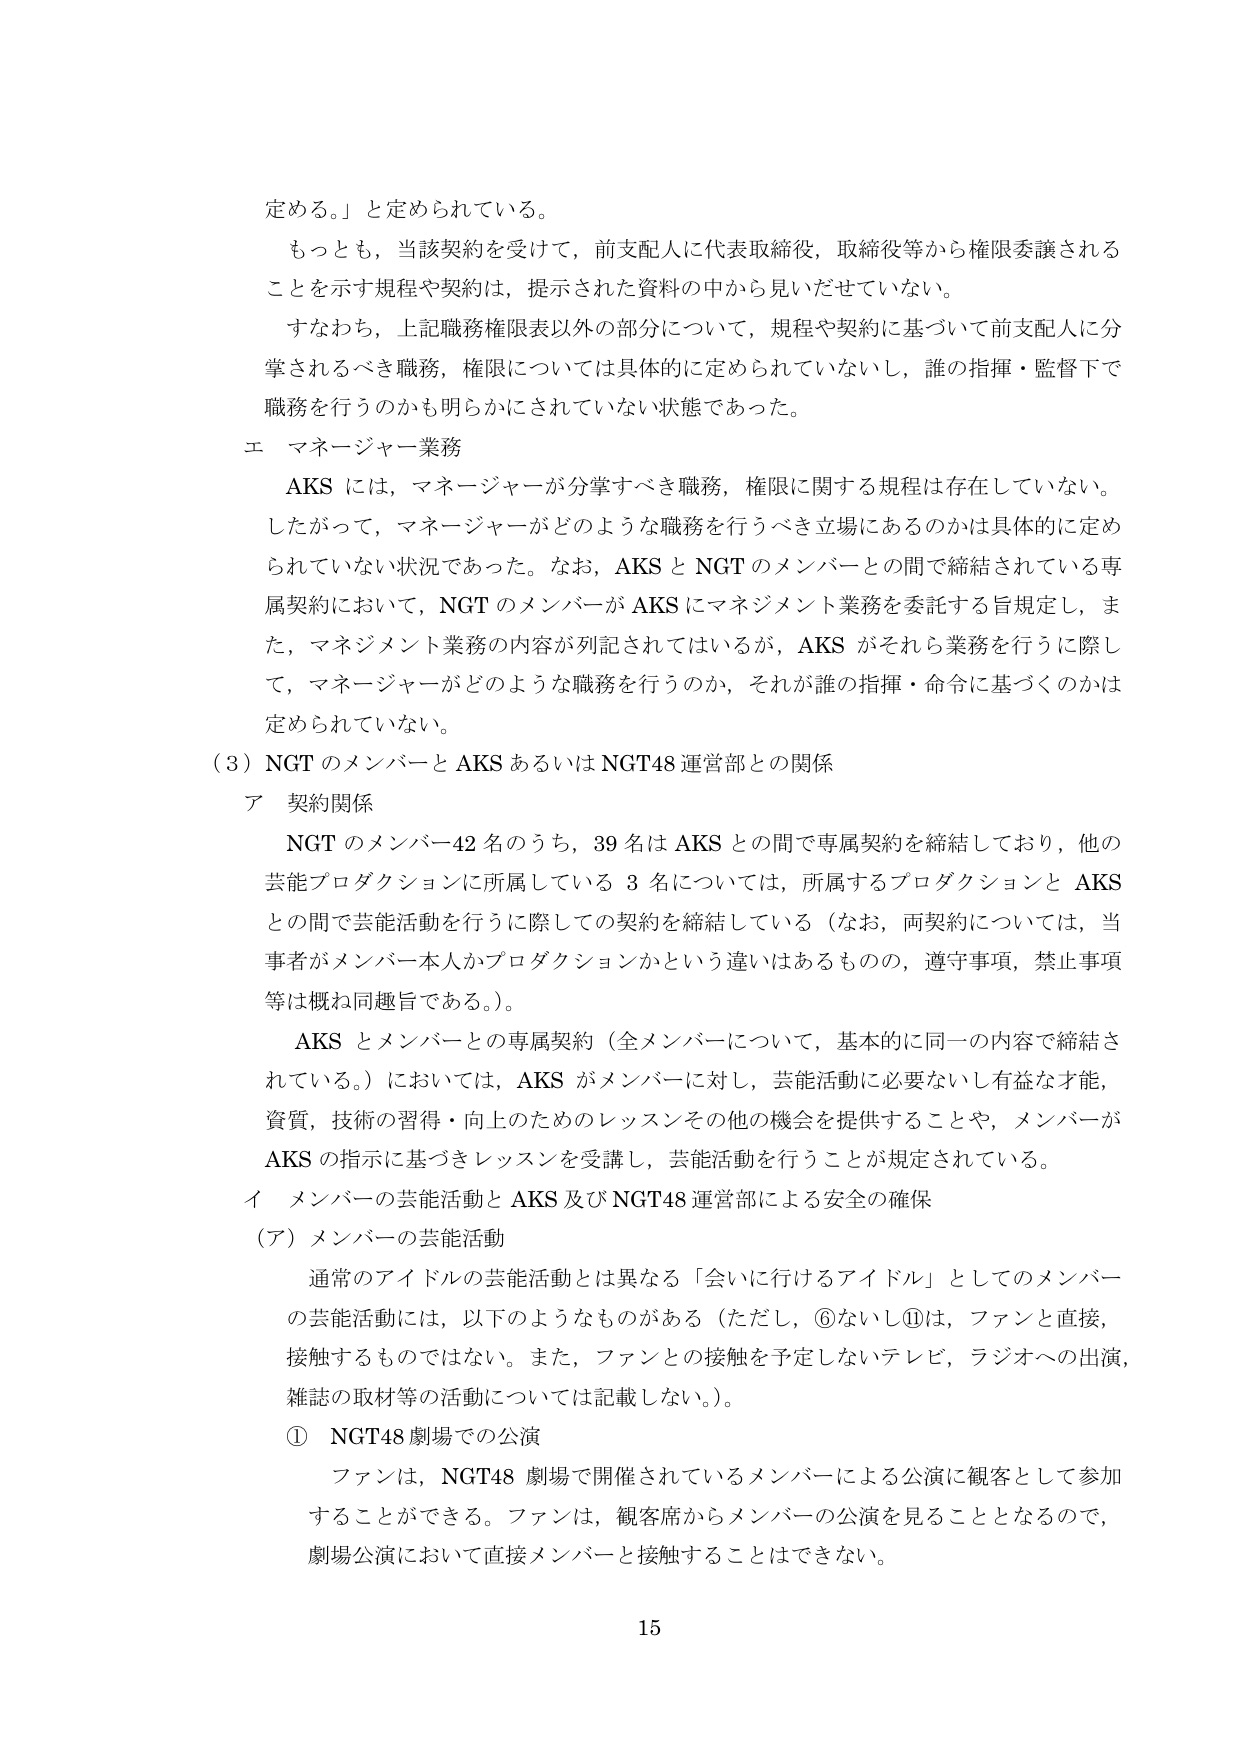 NGT48第三者委員会調査報告書17